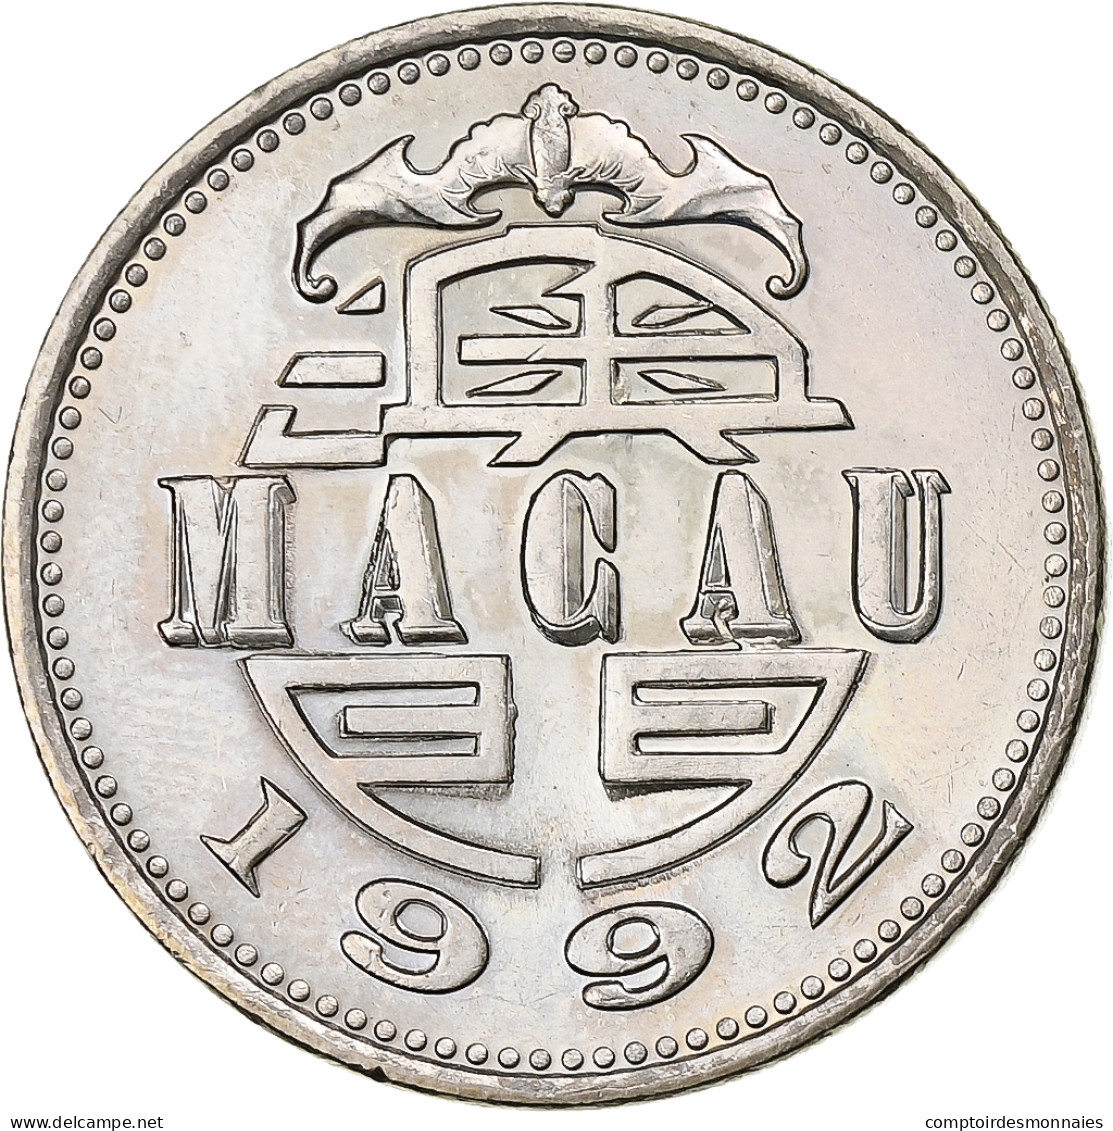 Macao, Pataca, 1992, British Royal Mint, Cupro-nickel, SUP, KM:57 - Macau